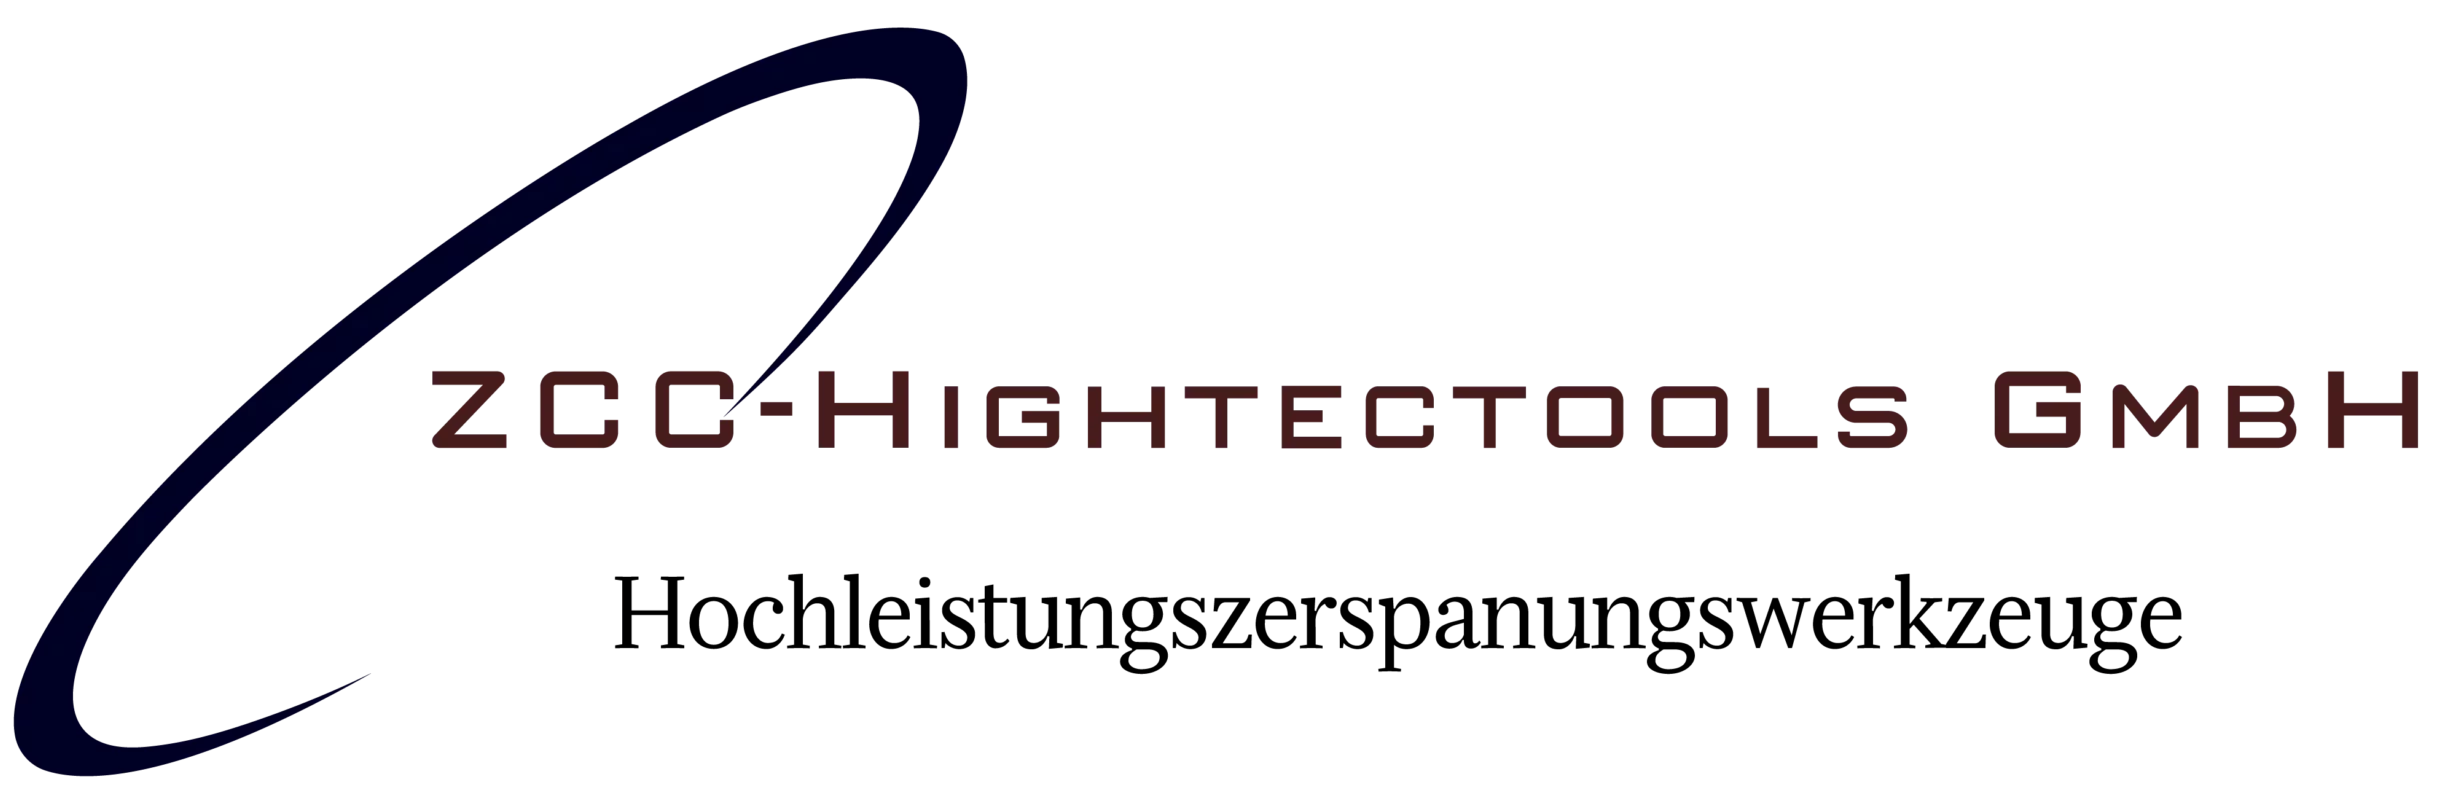 ZCC Hightectools